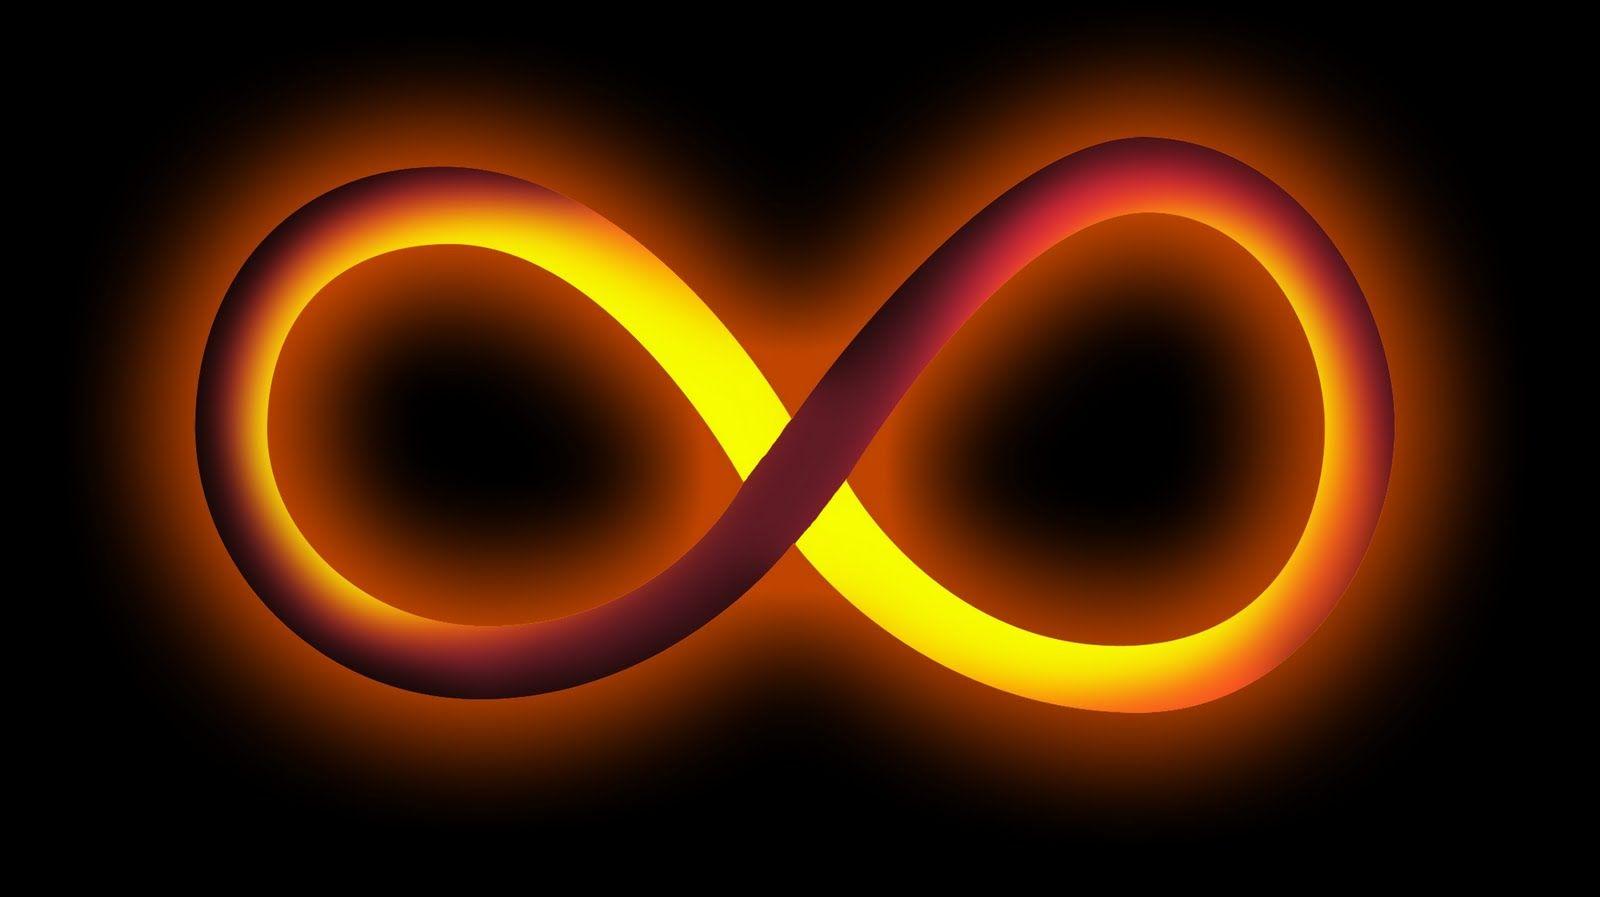 Infinity symbol HD wallpapers free download | Wallpaperbetter